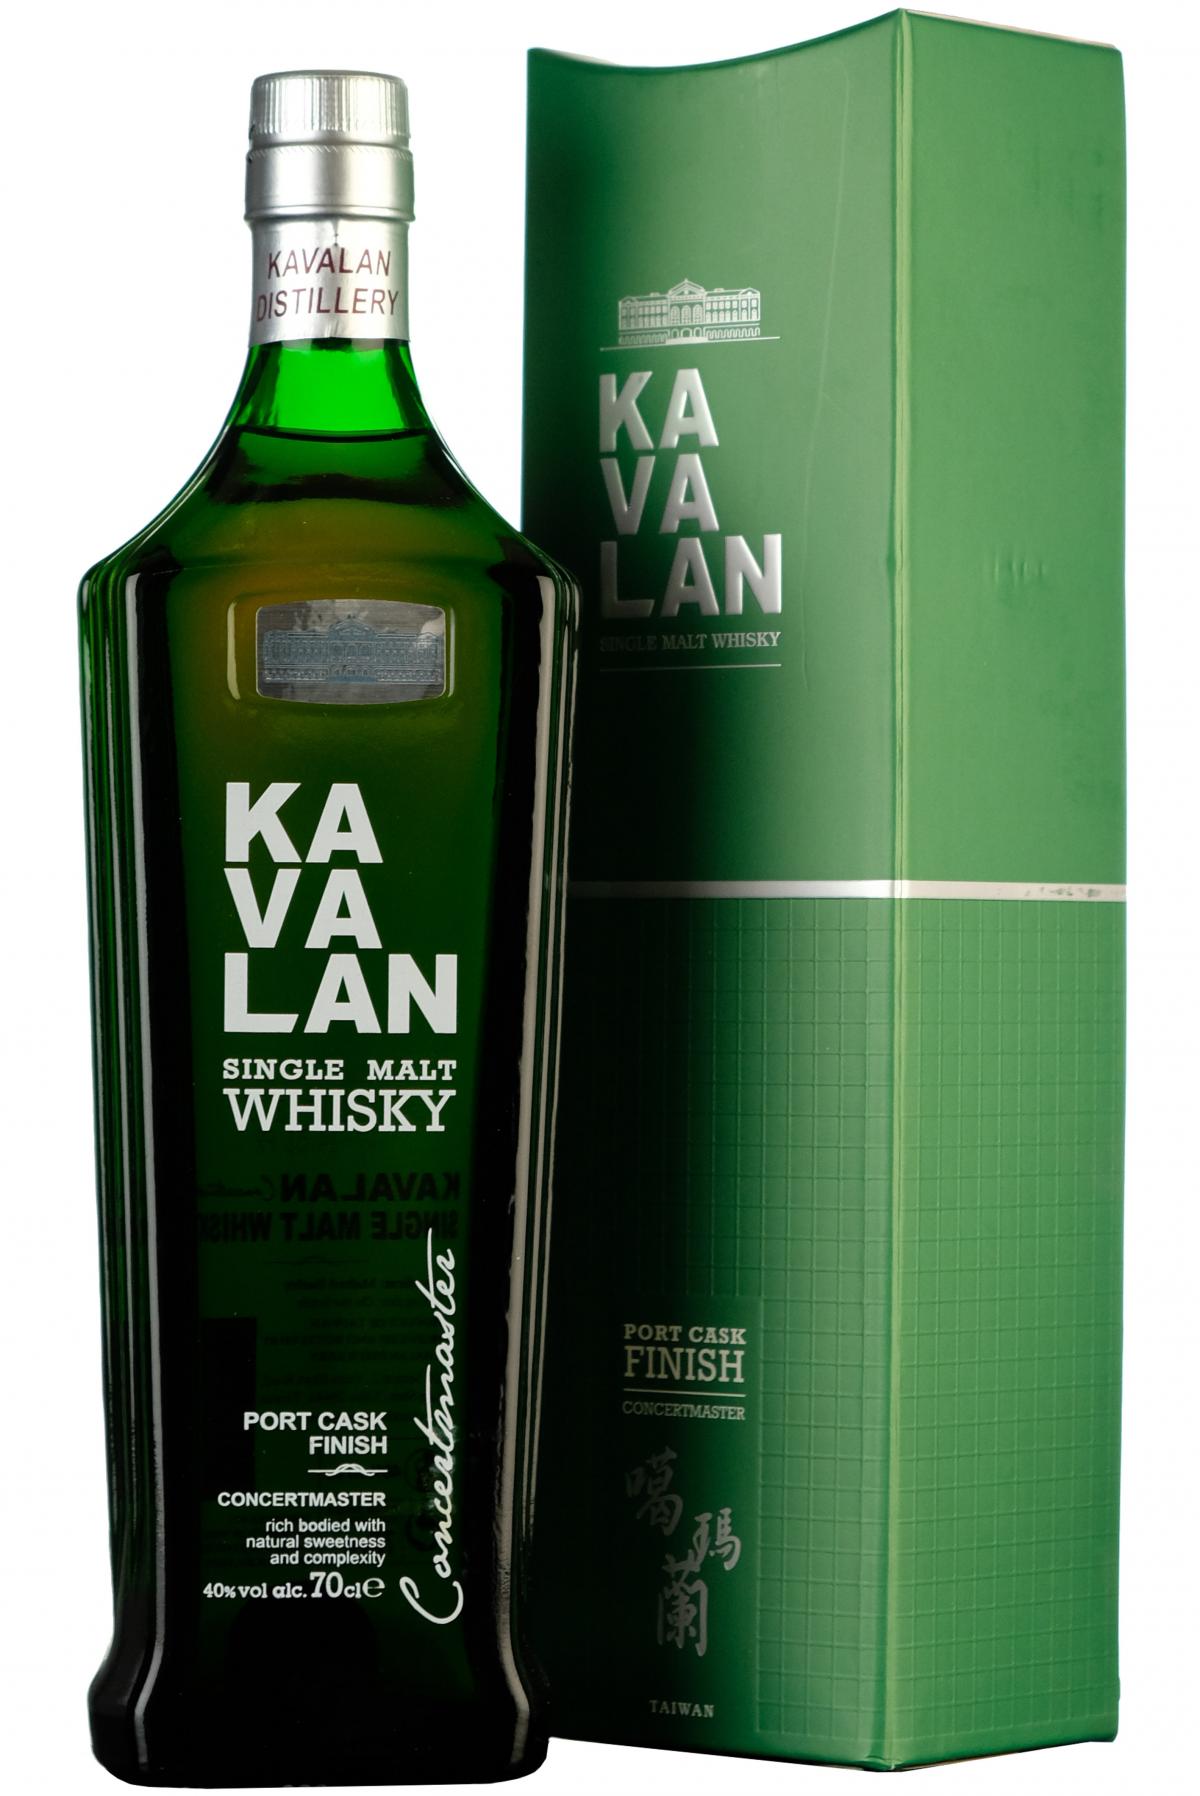 kavalan, concertmarster, port cask finish single, malt, king car, taiwanese, whisky, whiskey